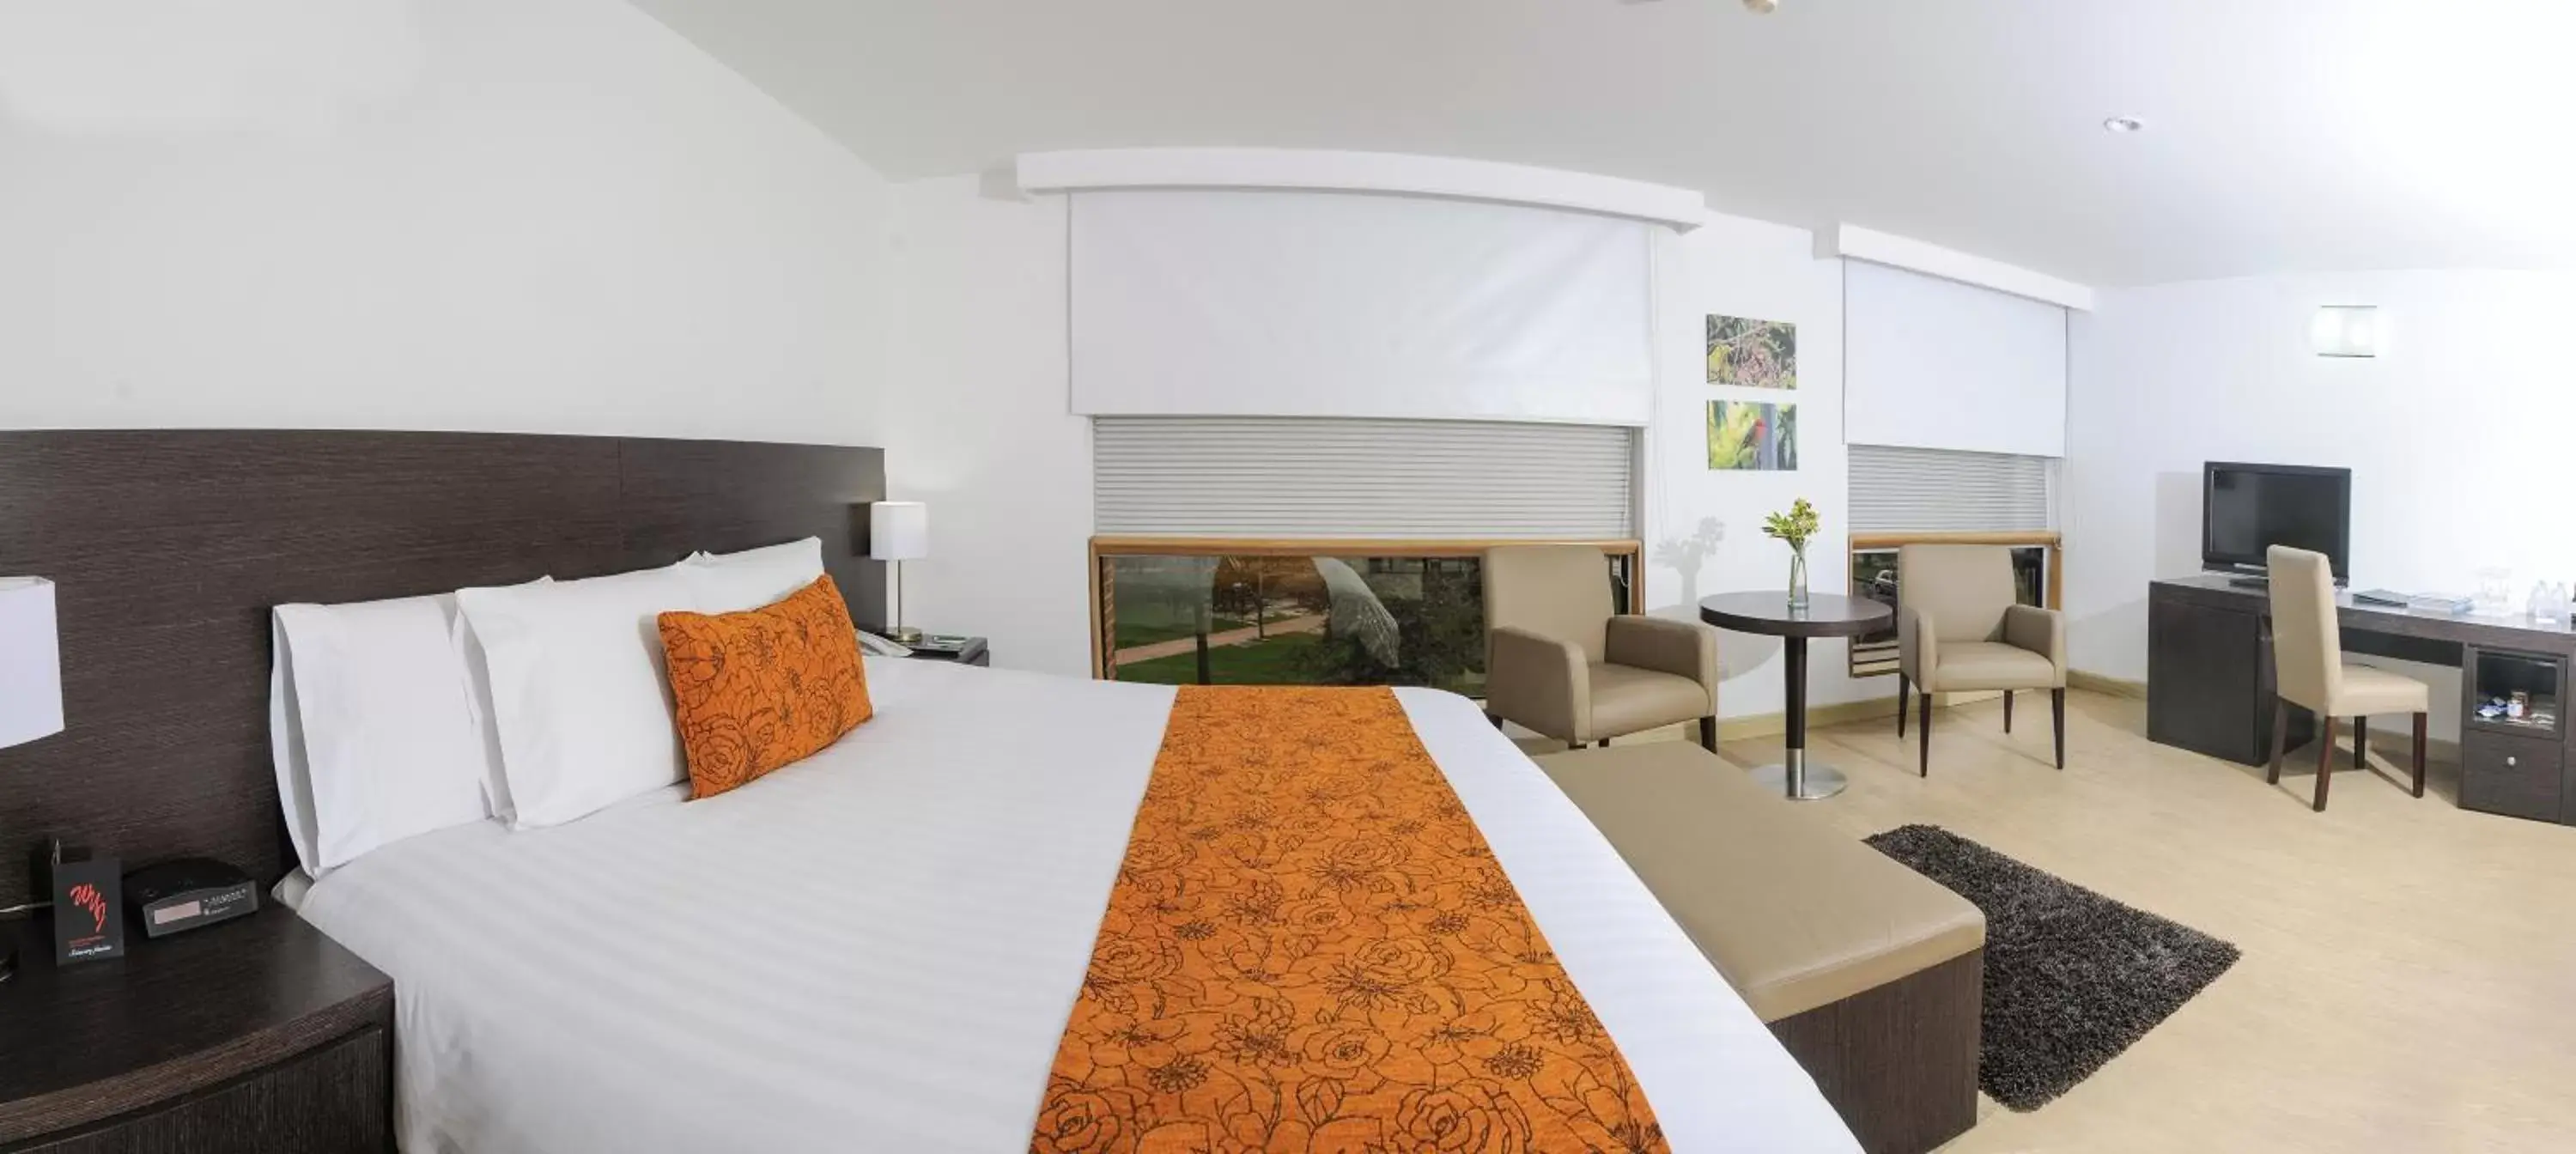 Bedroom in Hotel Parque 97 Suites